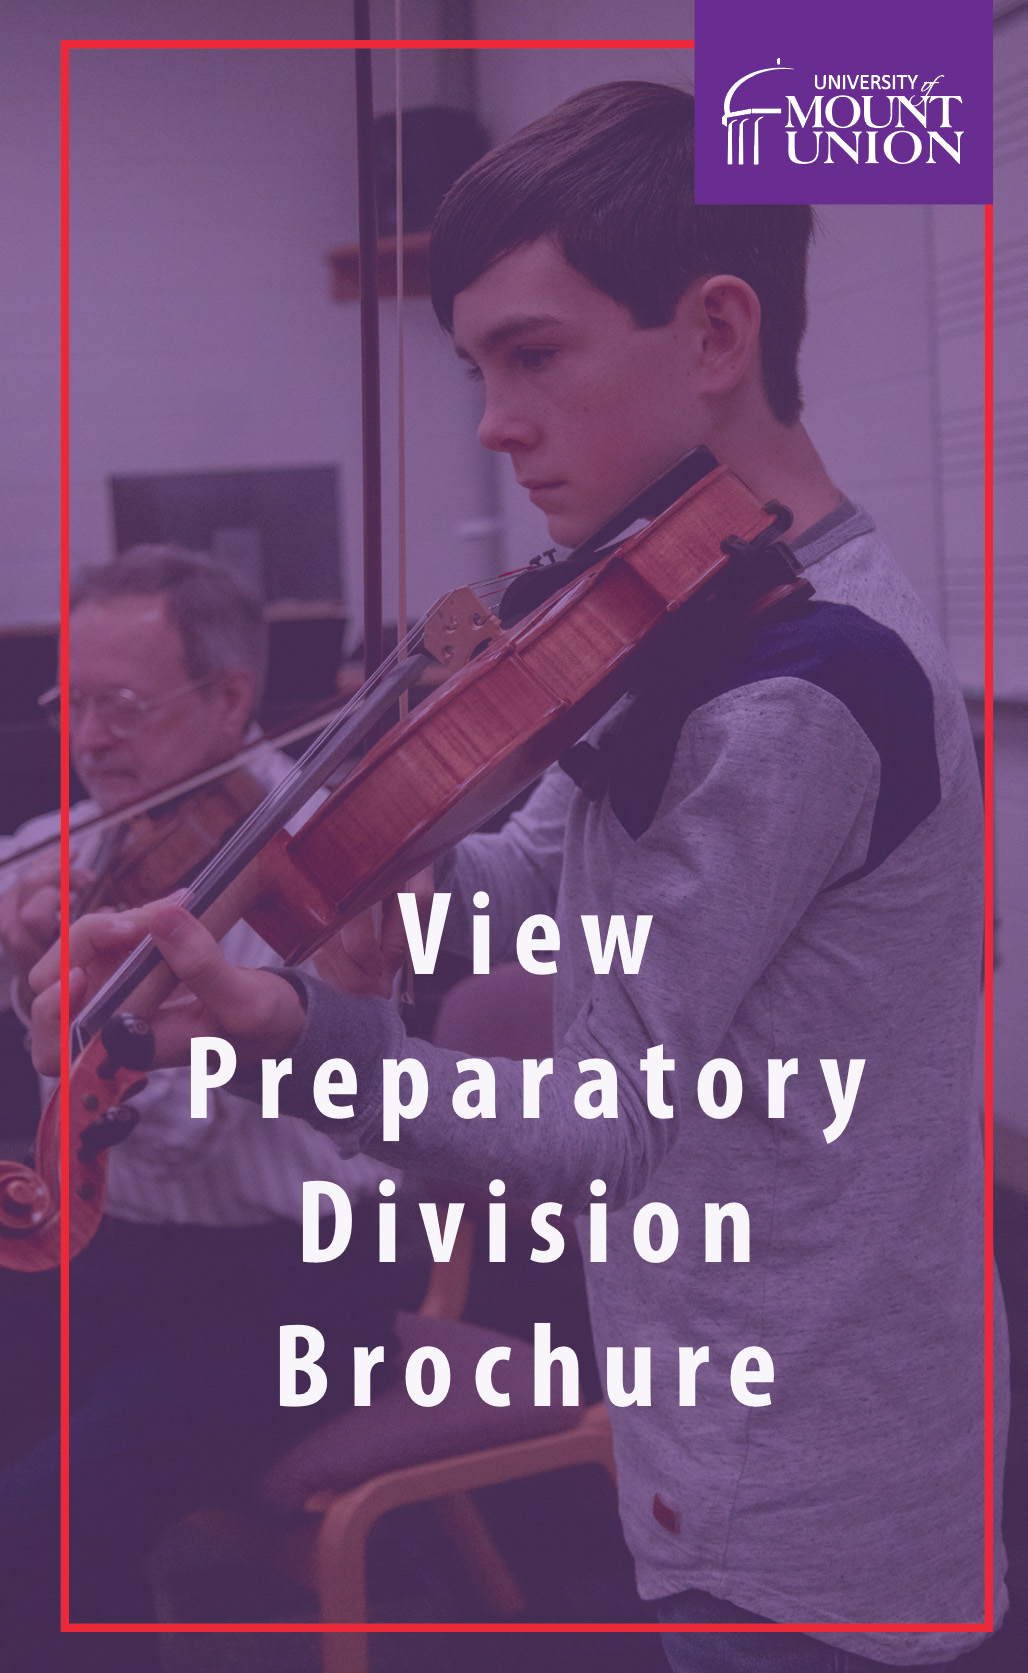 Prep Division Brochure Cover